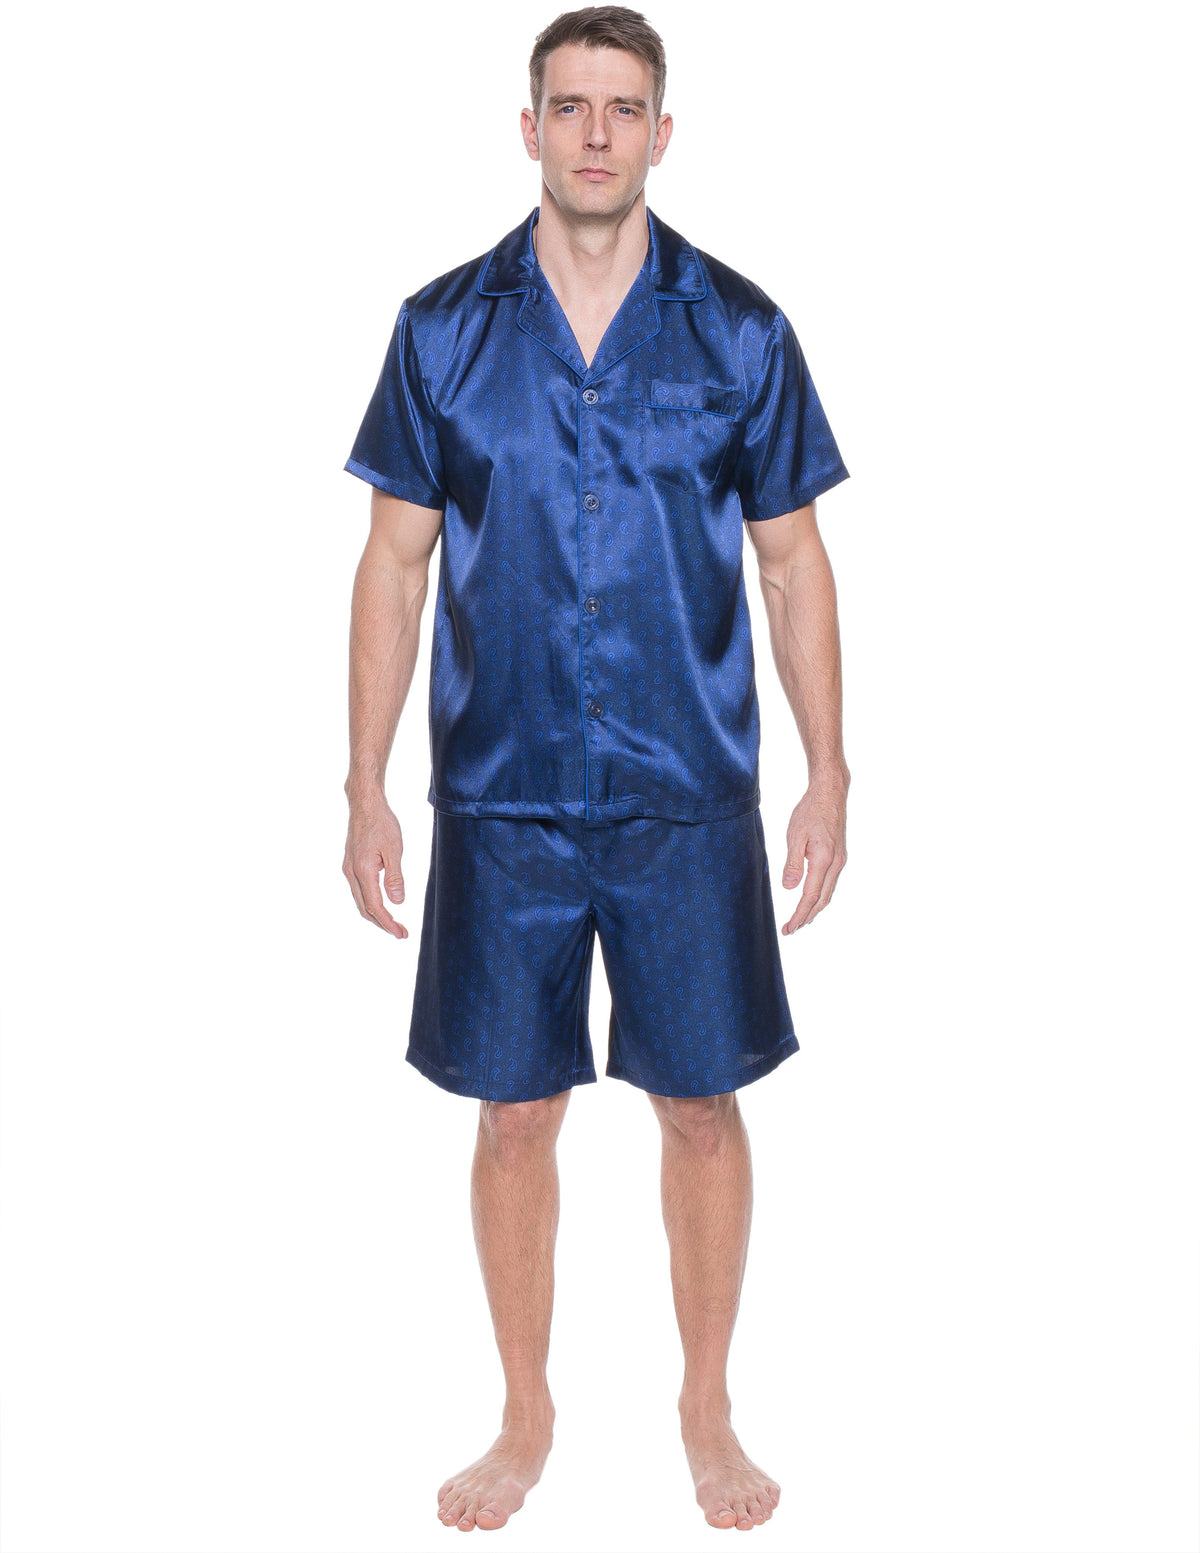 Mens Satin Short Sleepwear/Pajama Set - Paisley Blue